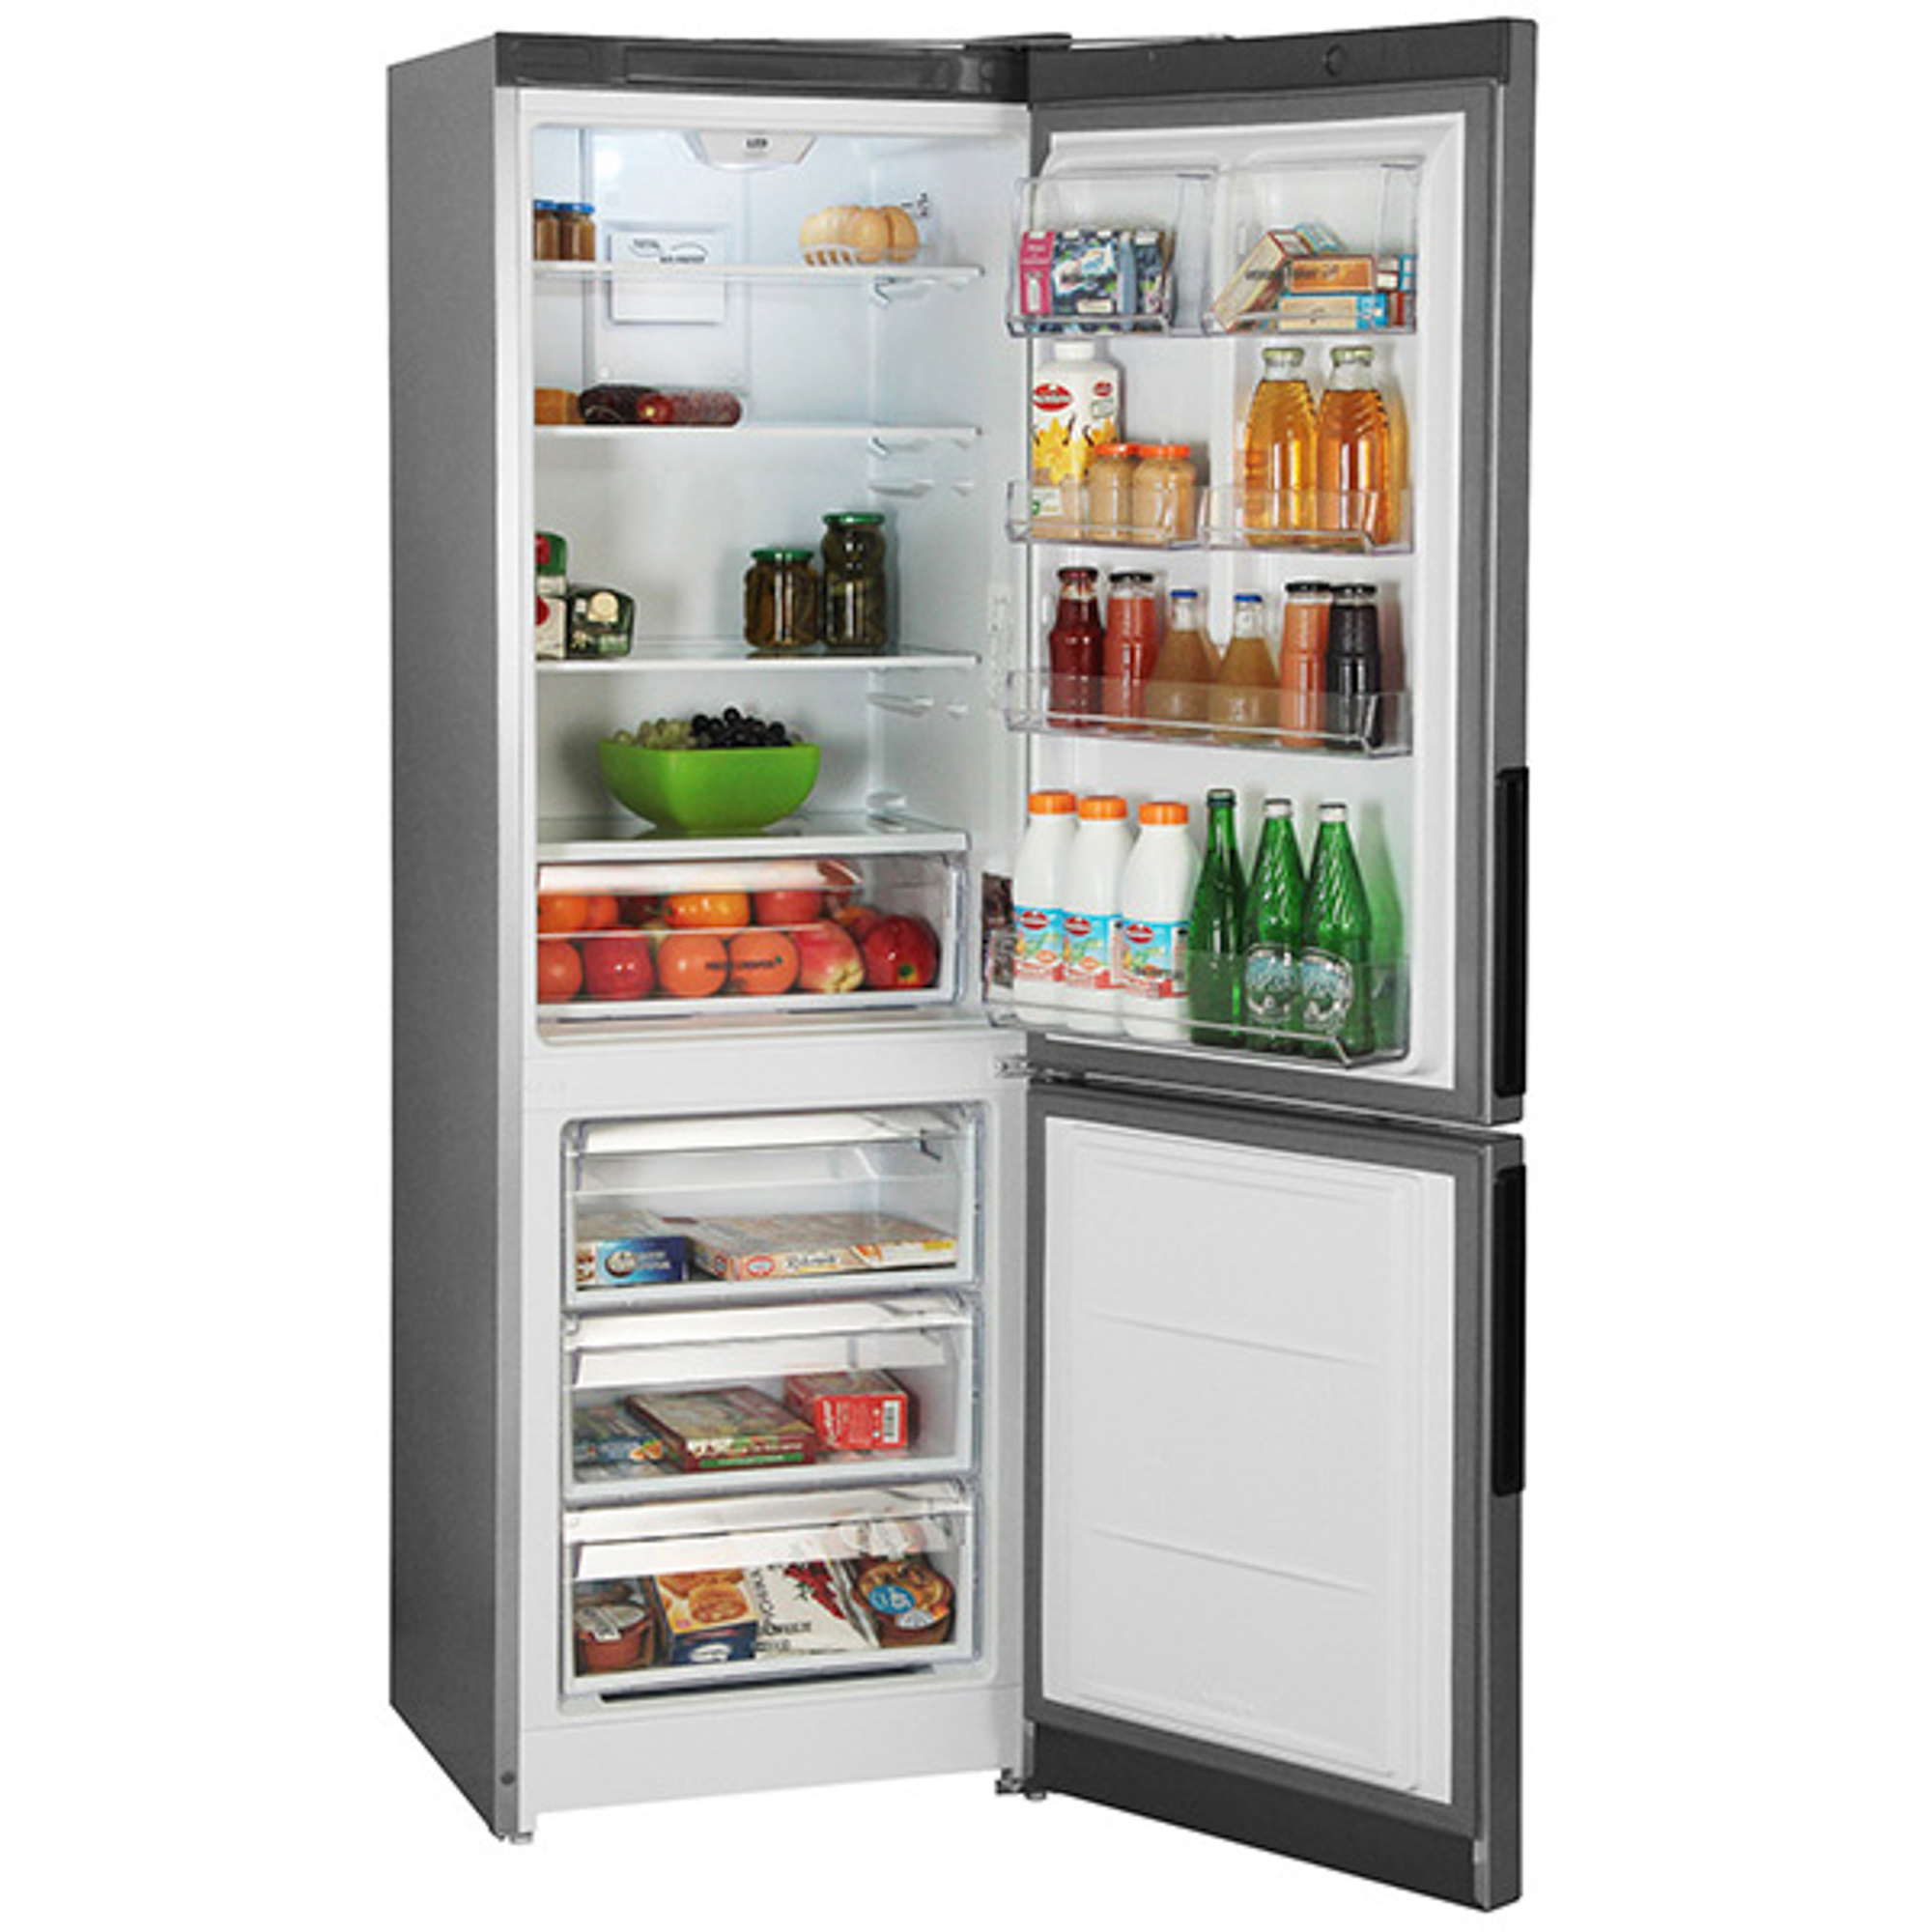 Ariston hf холодильник. Холодильник Hotpoint-Ariston HF 5180 S. Хотпоинт 5180 холодильник. Hotpoint-Ariston HF 5180. Холодильник Hotpoint-Ariston HFP 5180 W.